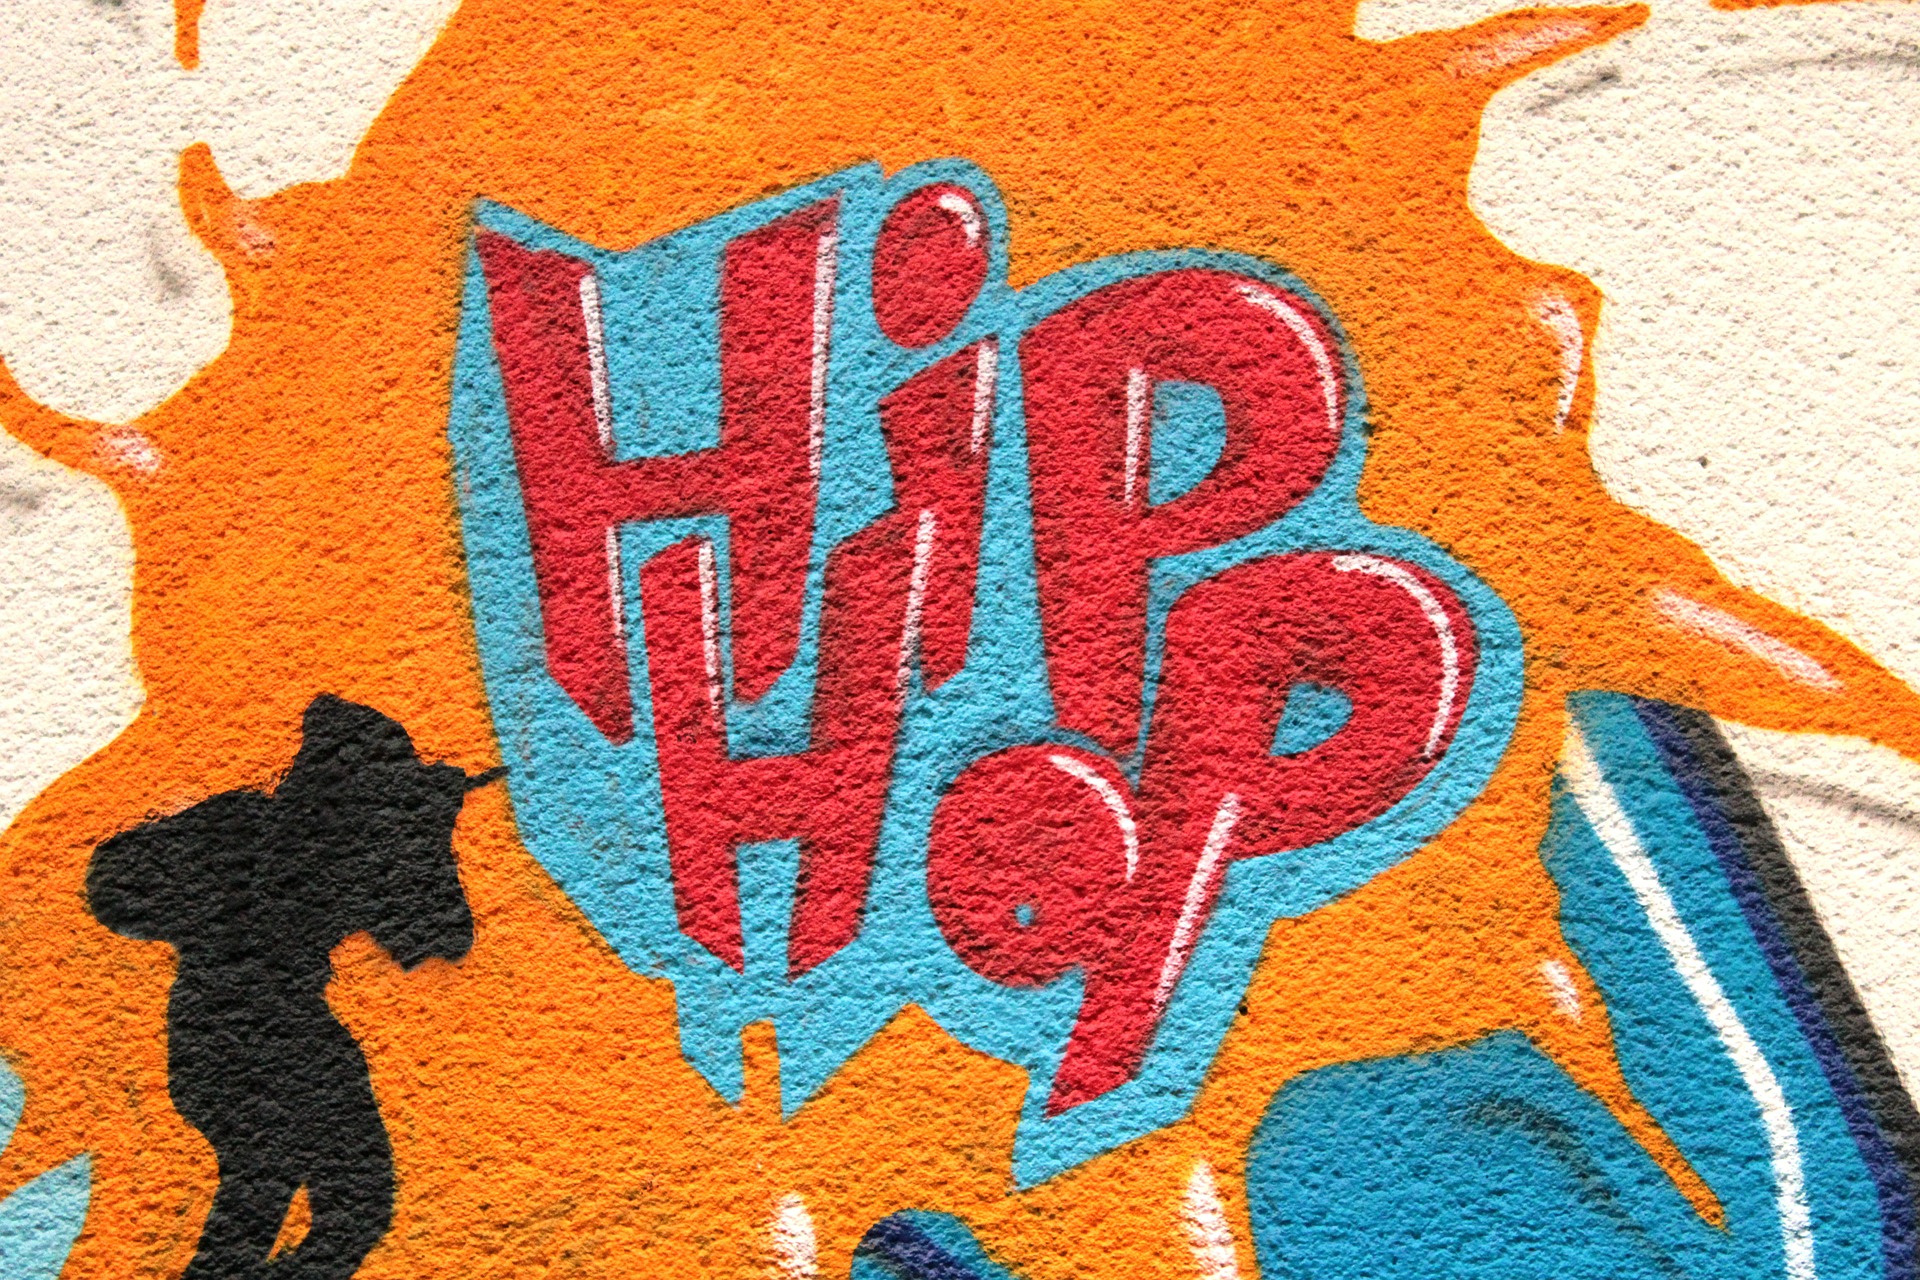 hip_hop